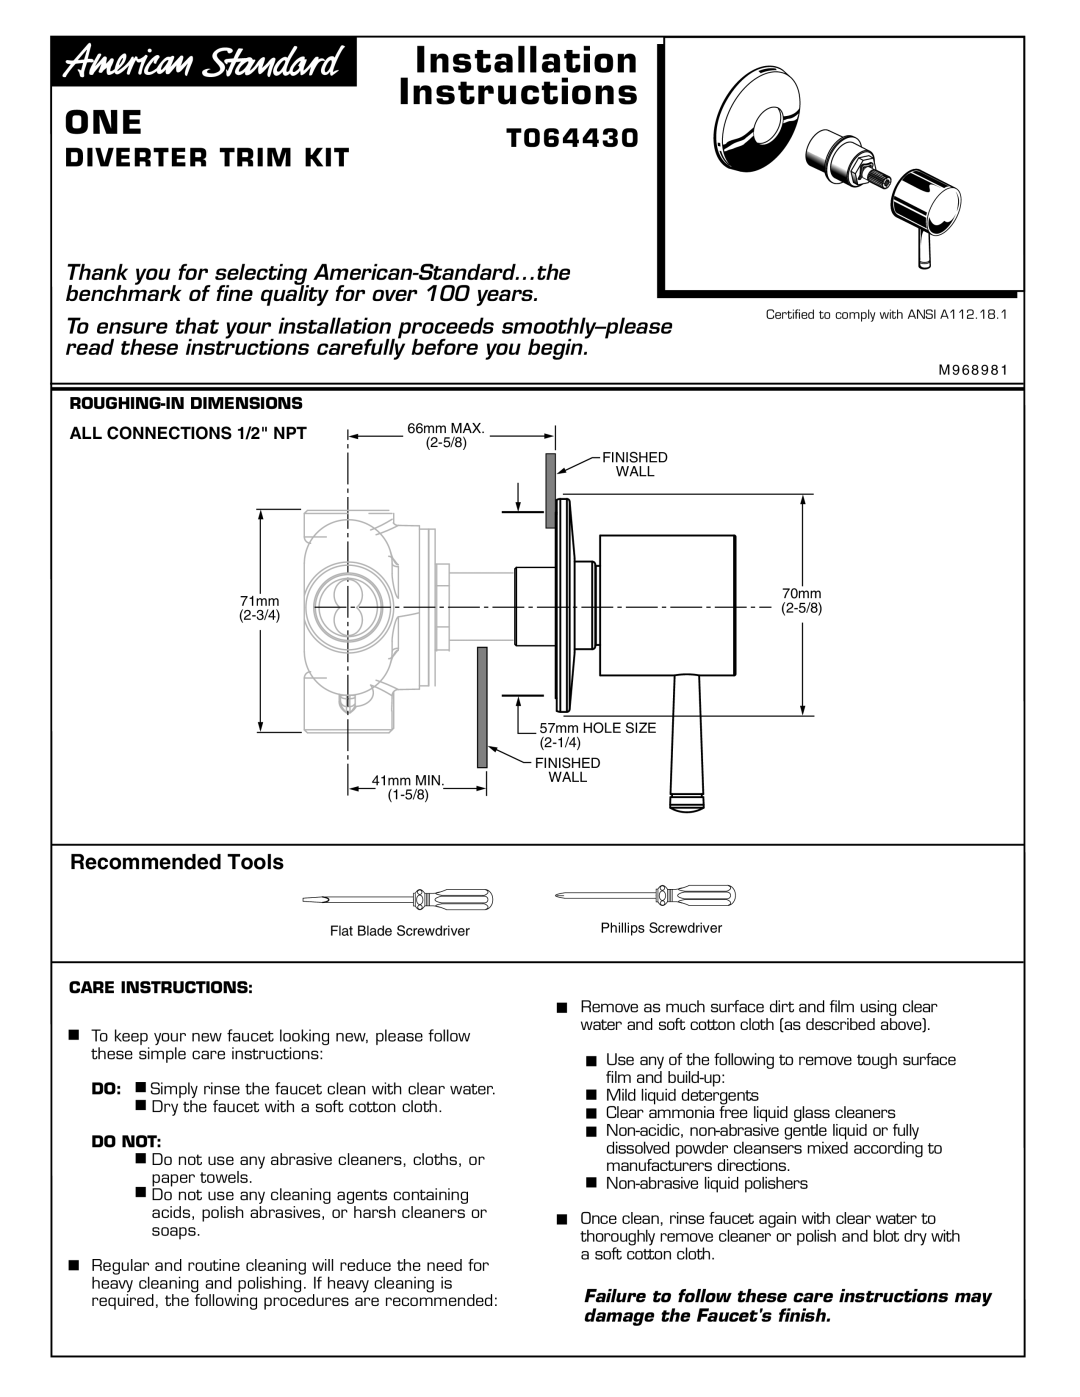 American Standard M968981 installation instructions T064430, Diverter Trim Kit, Installation, Instructions 